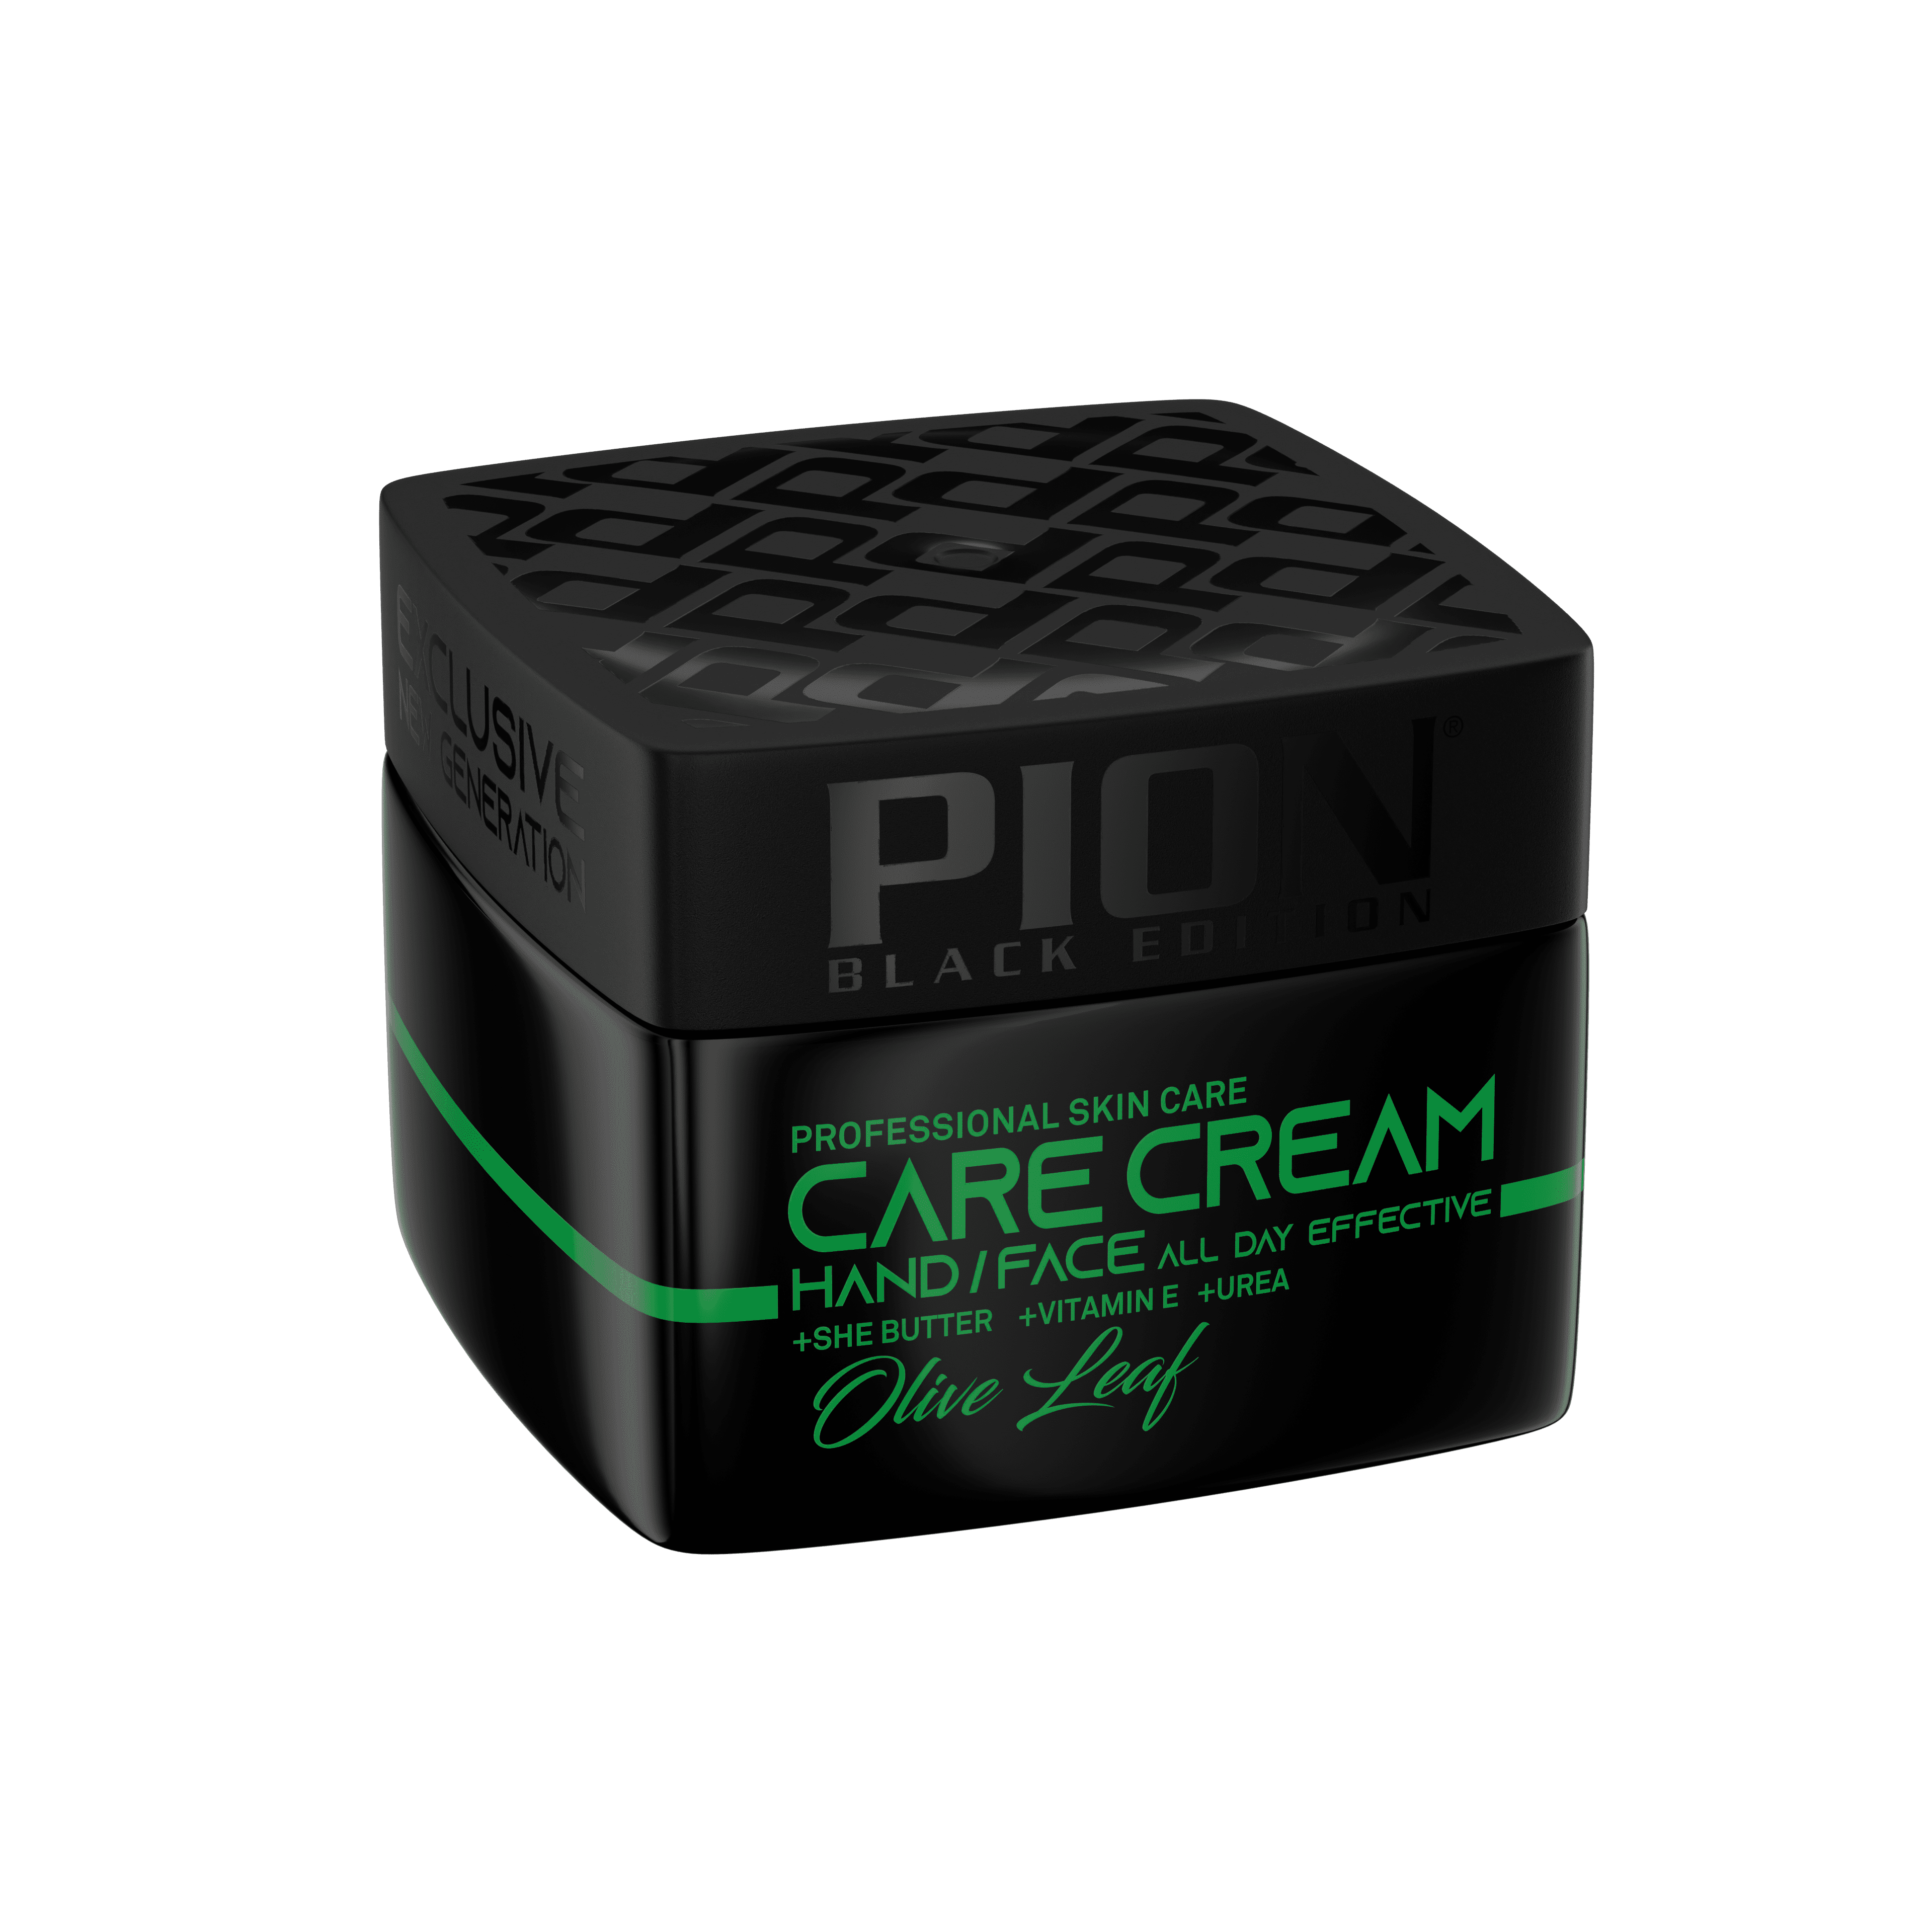 Pion Care Crame Hand & Face Olive Leaf 240 ml - PION BLACK EDITION